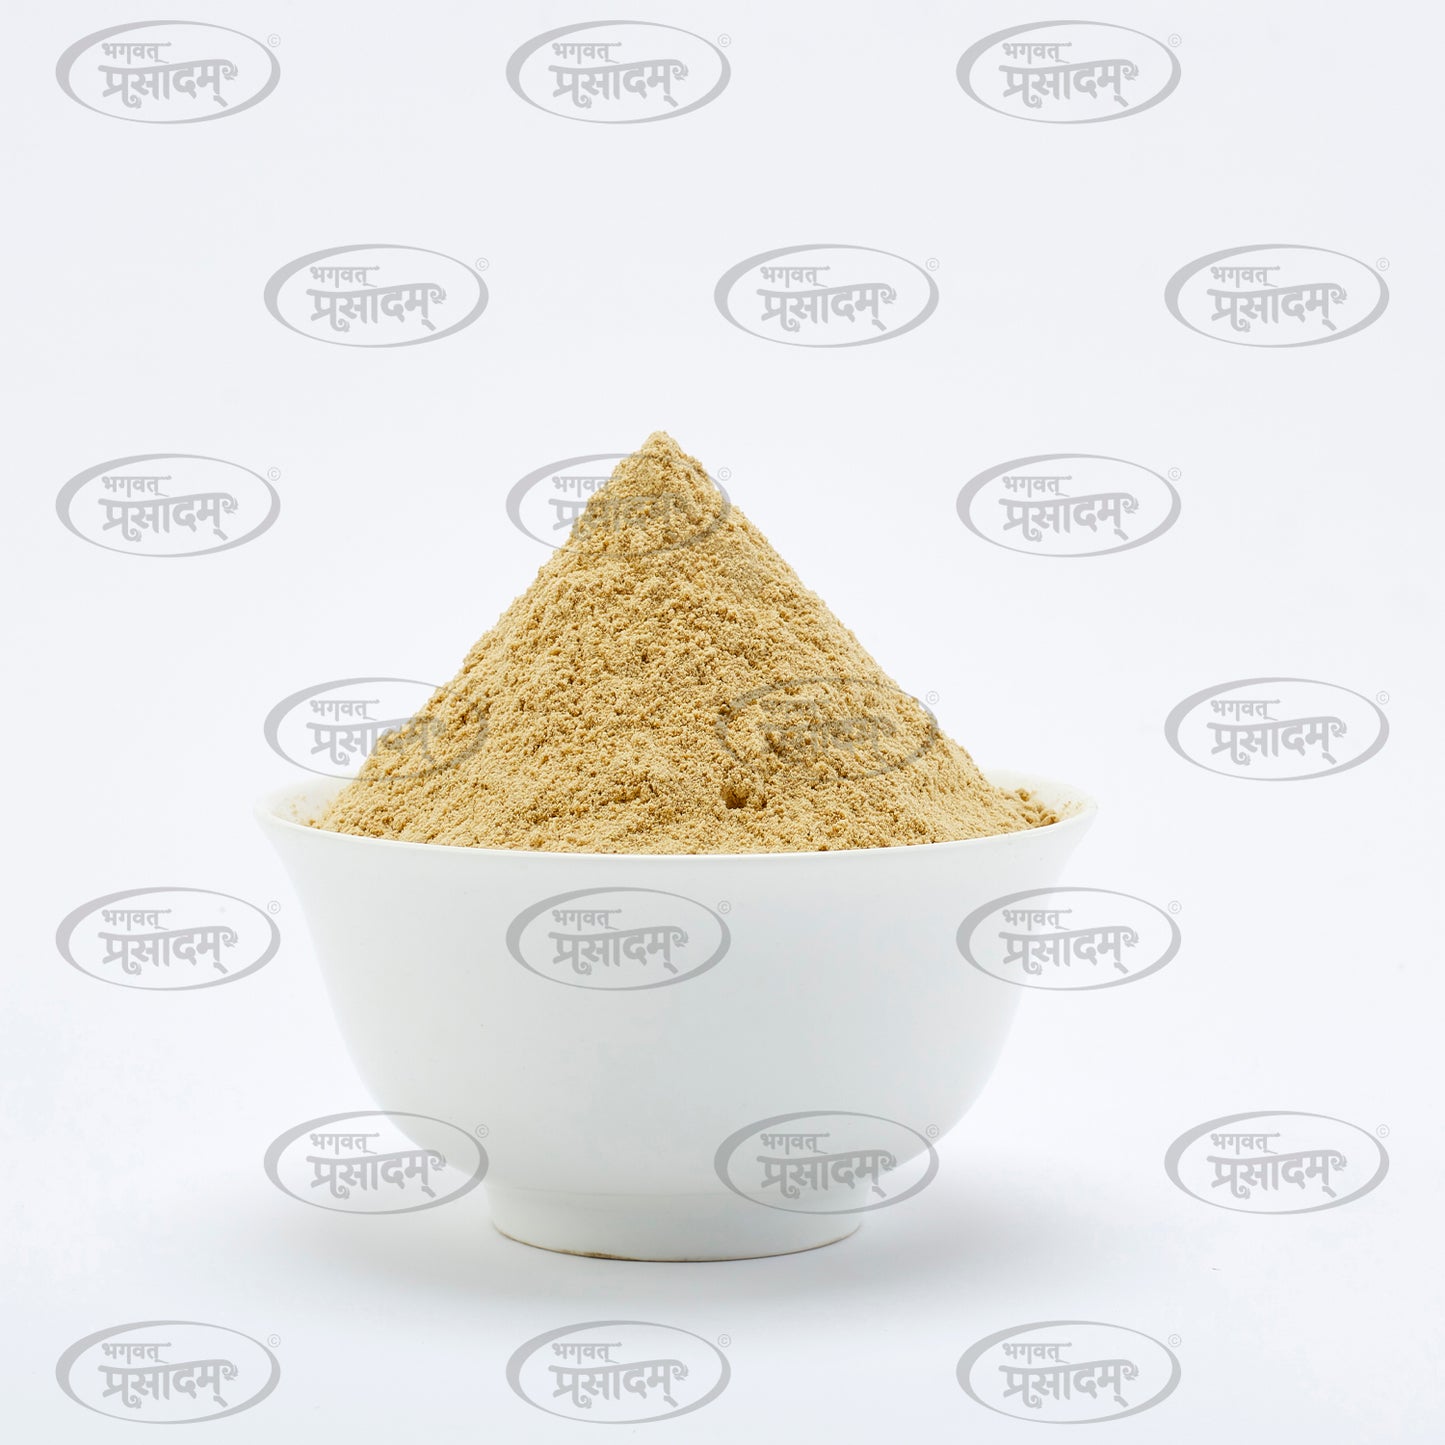 Aamchur Powder - Tangy Mango Flavor Enhancer by Bhagvat Prasadam